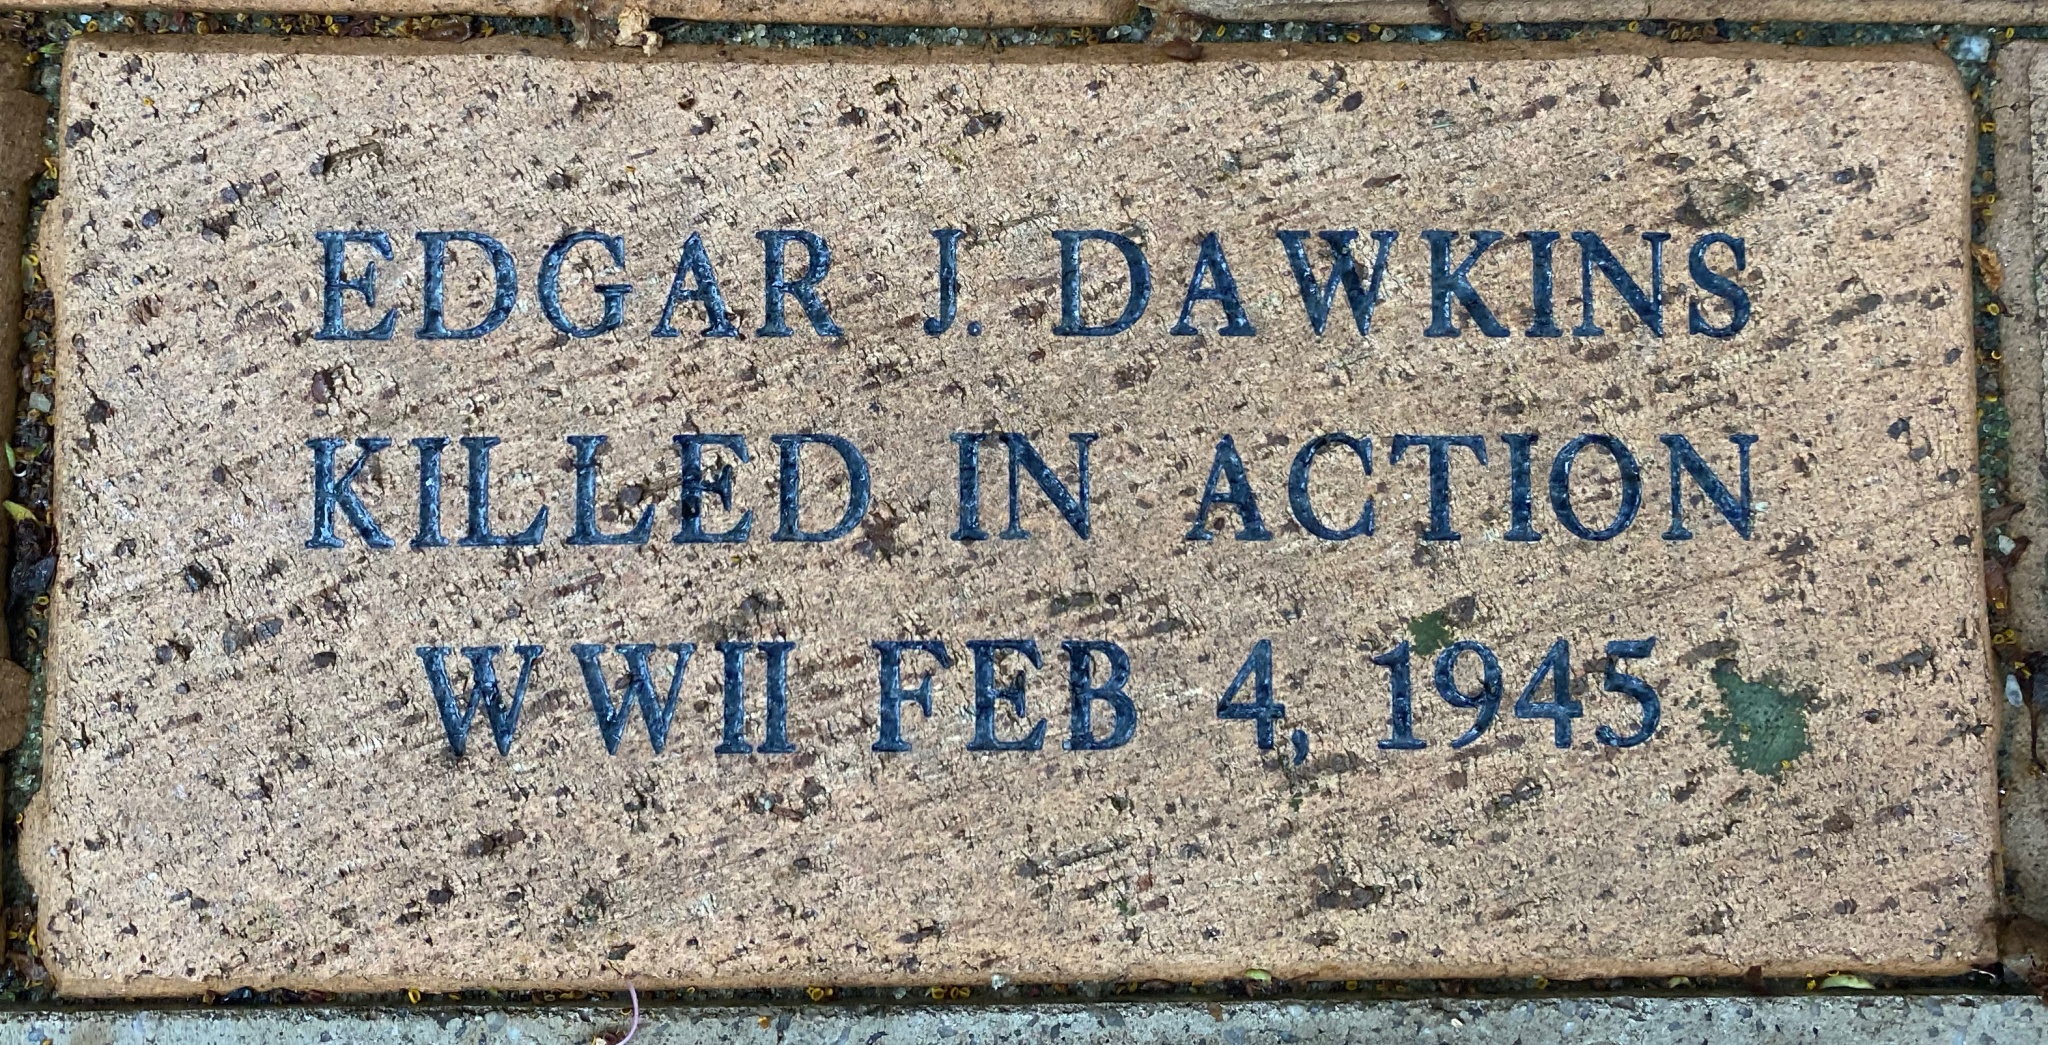 EDGAR J. DAWKINS KILLED IN ACTION WWII FEB.4, 1945